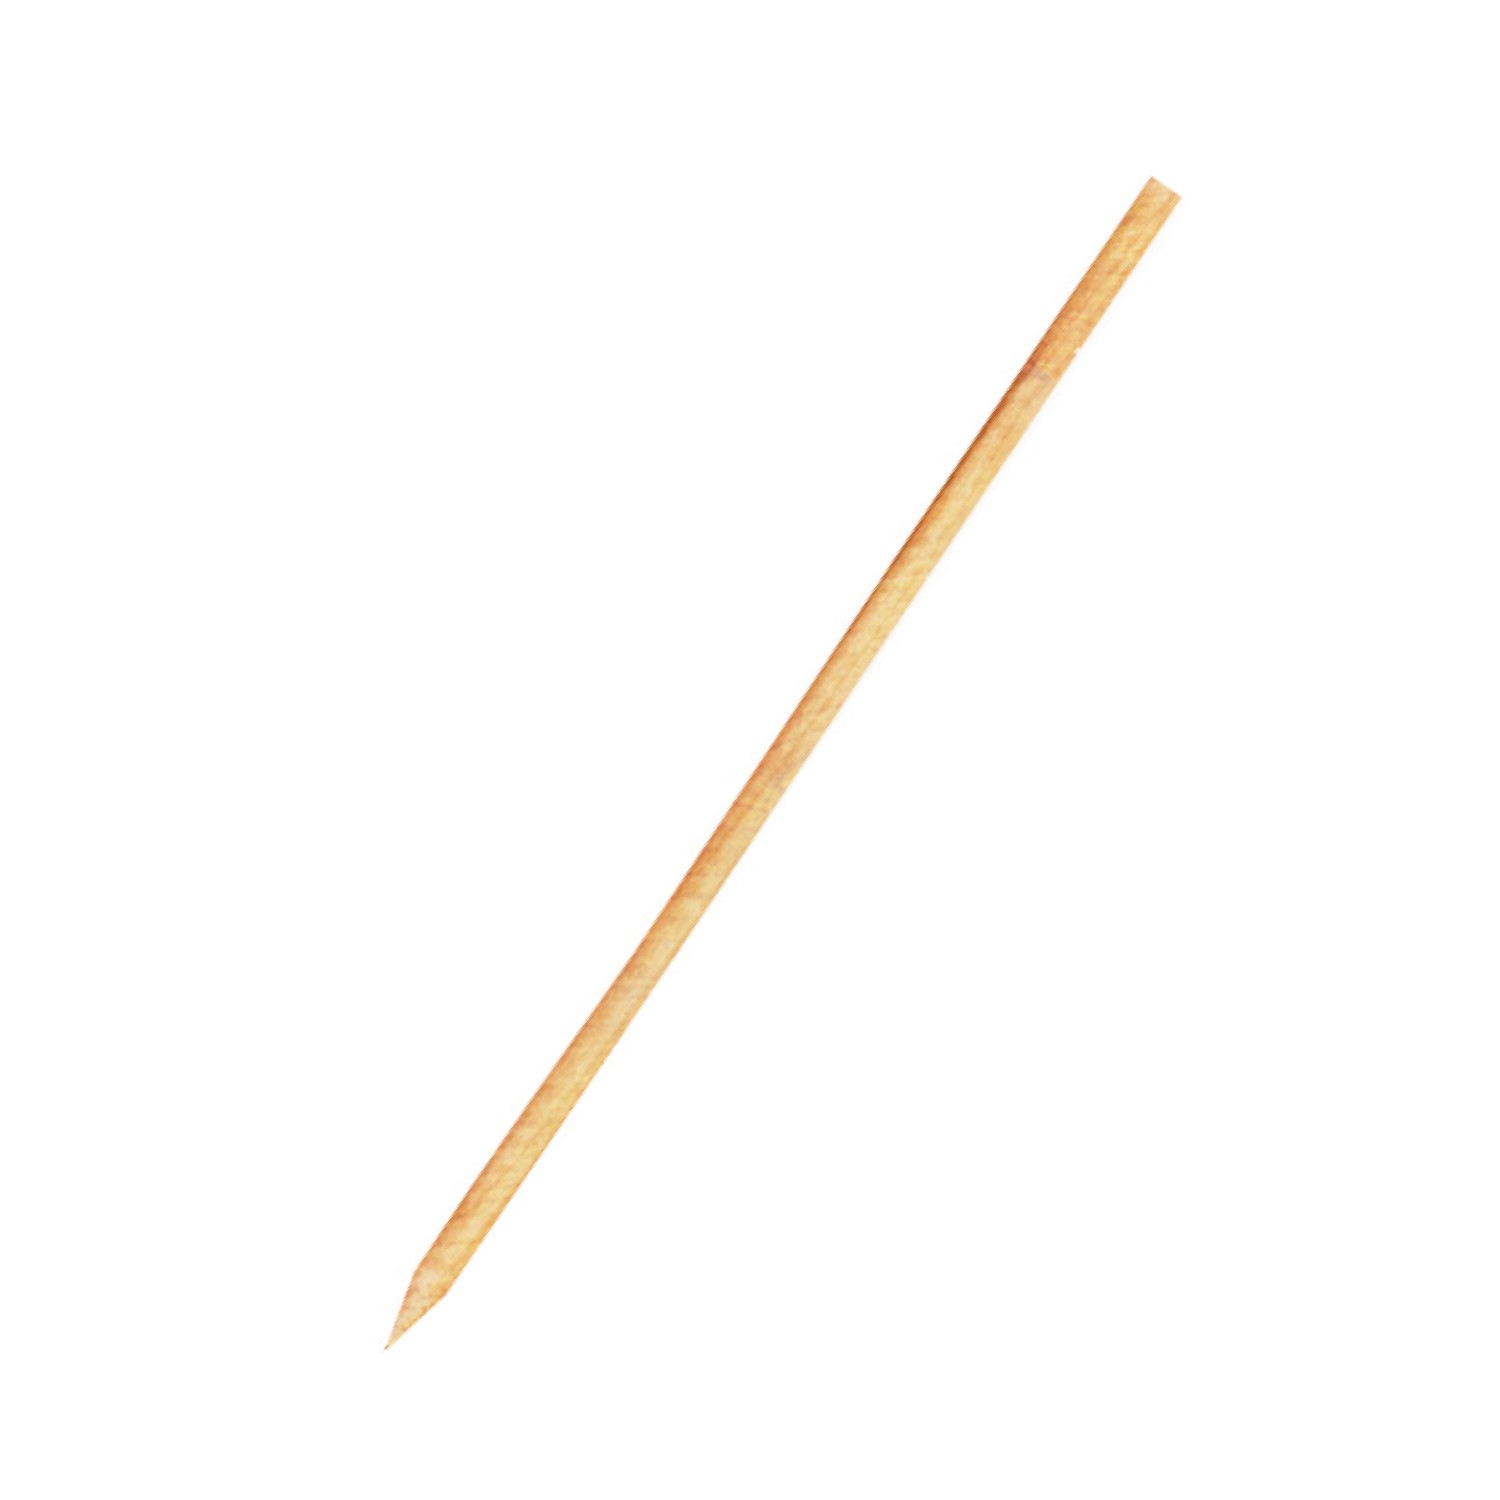 Bambusové špajdle ostré 40 cm, Ø 5 mm [100 ks]